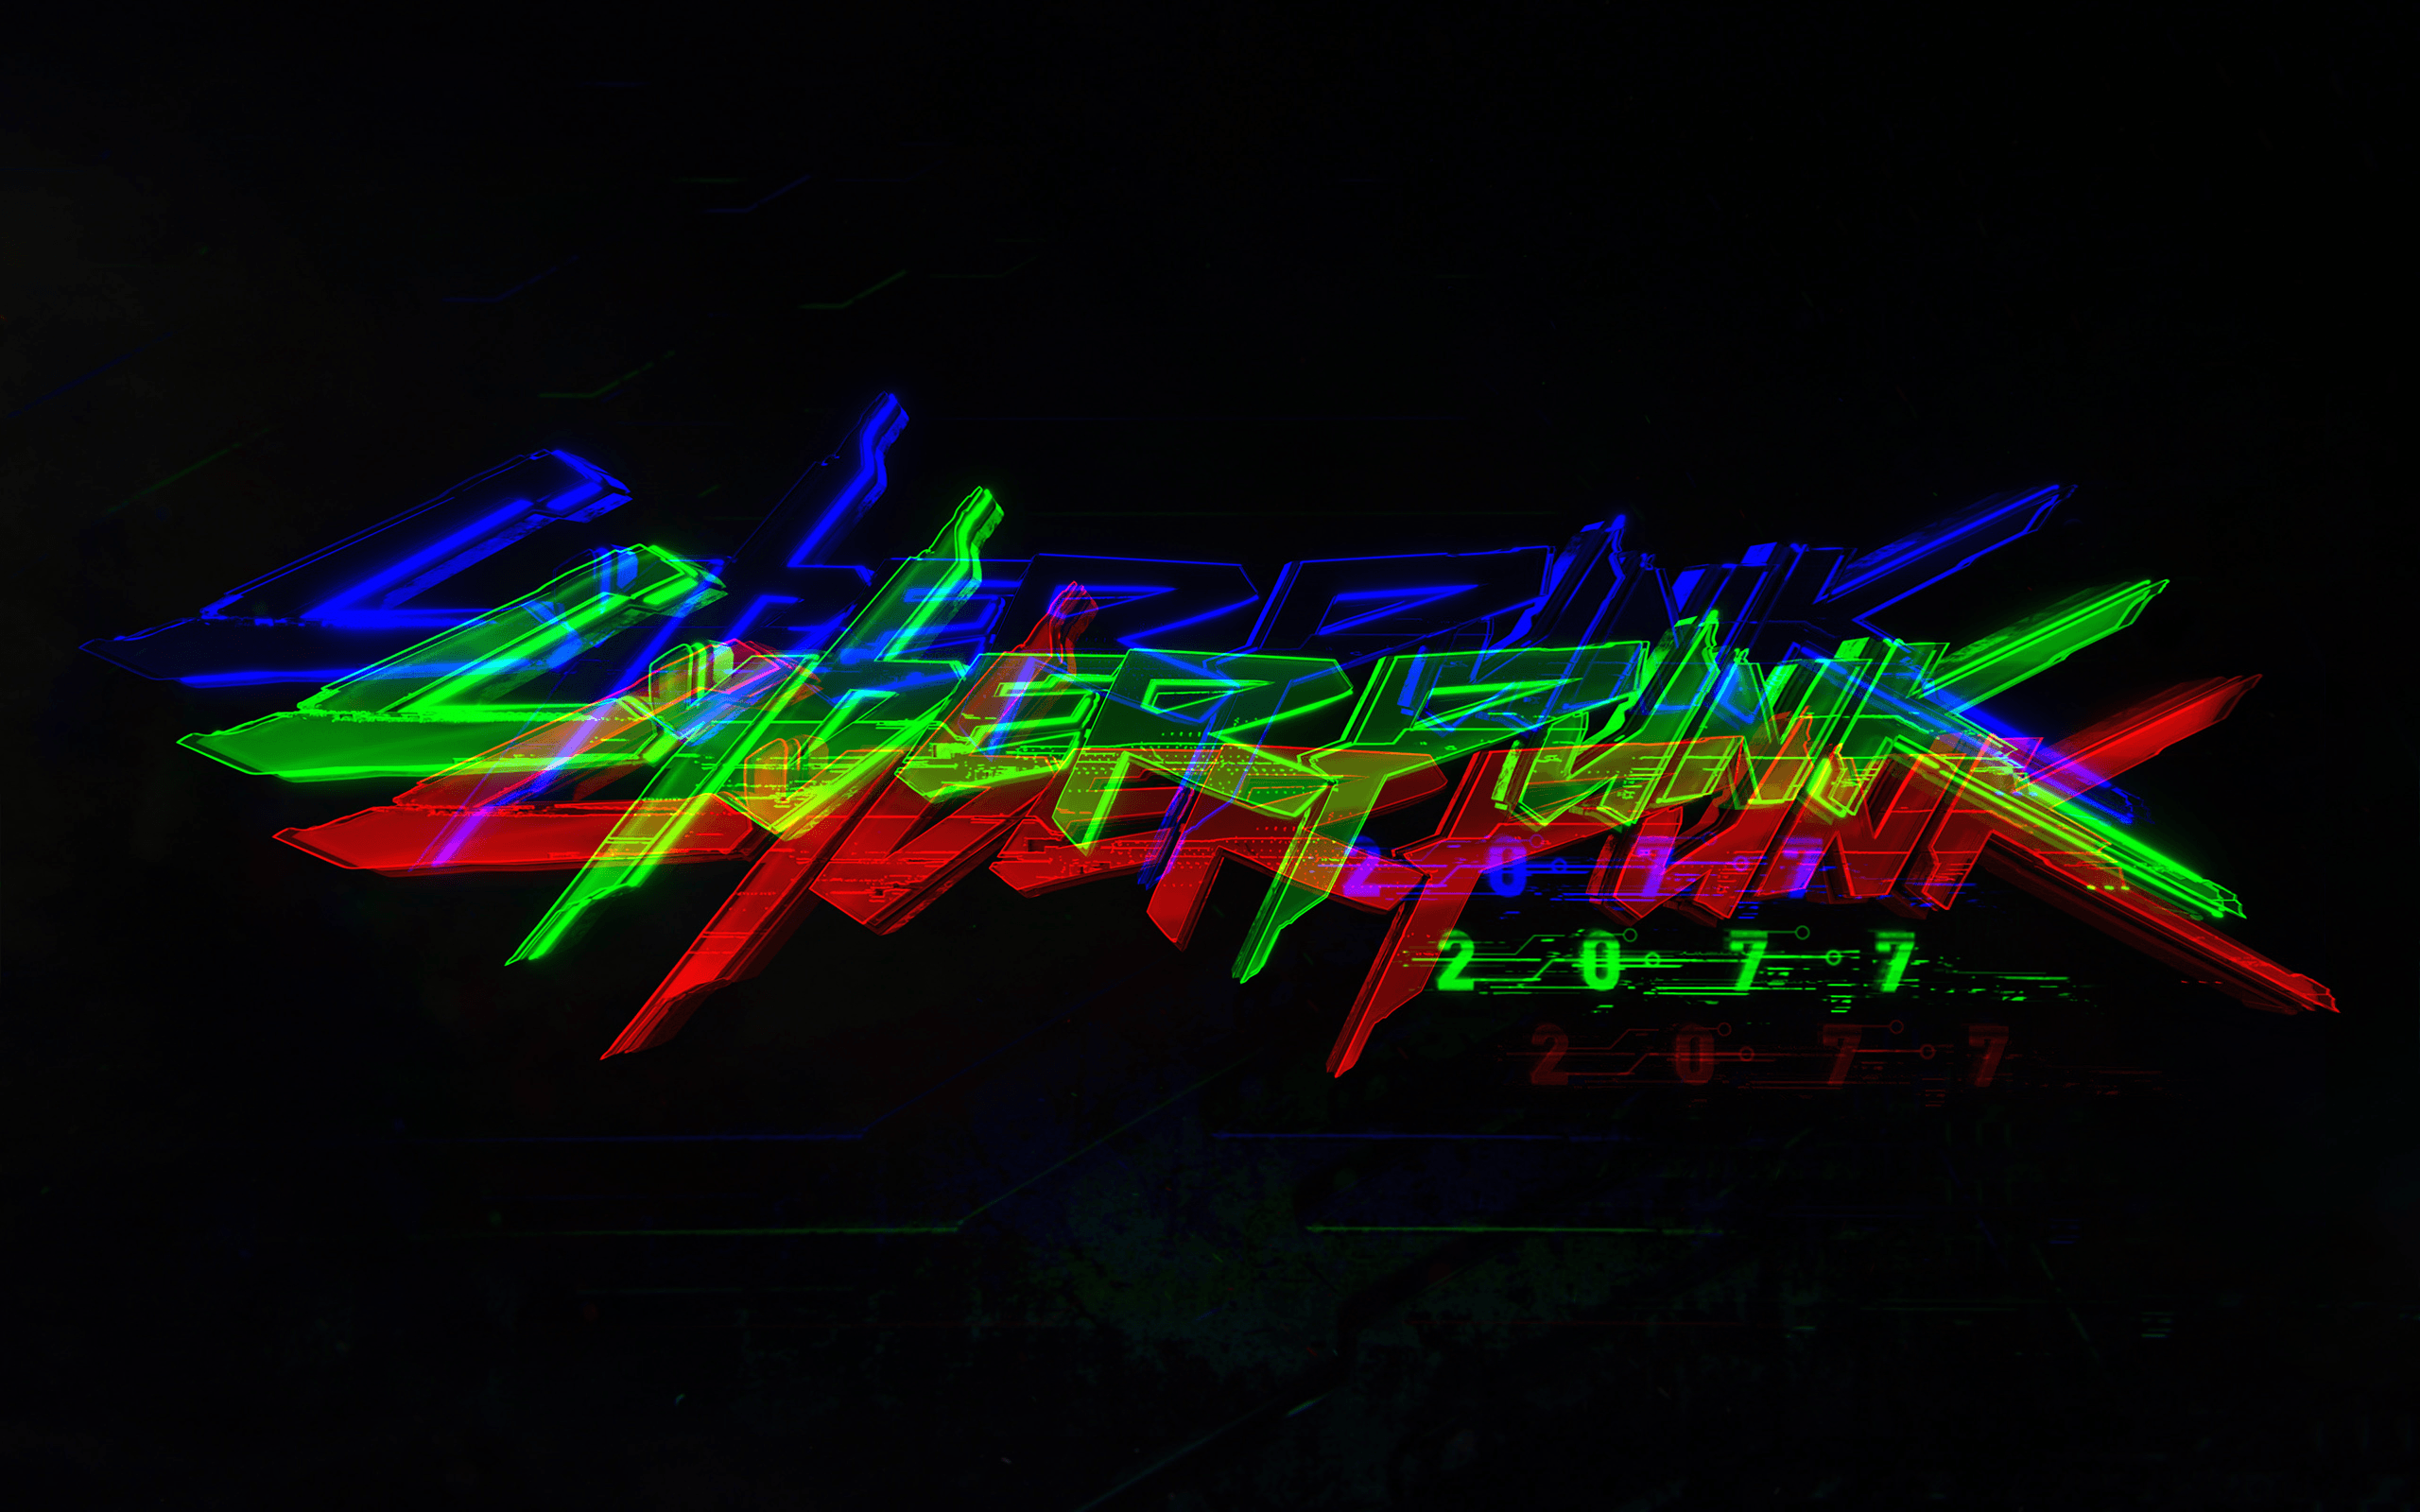 Made a neat RGB edit of a Cyberpunk 2077 wallpaper